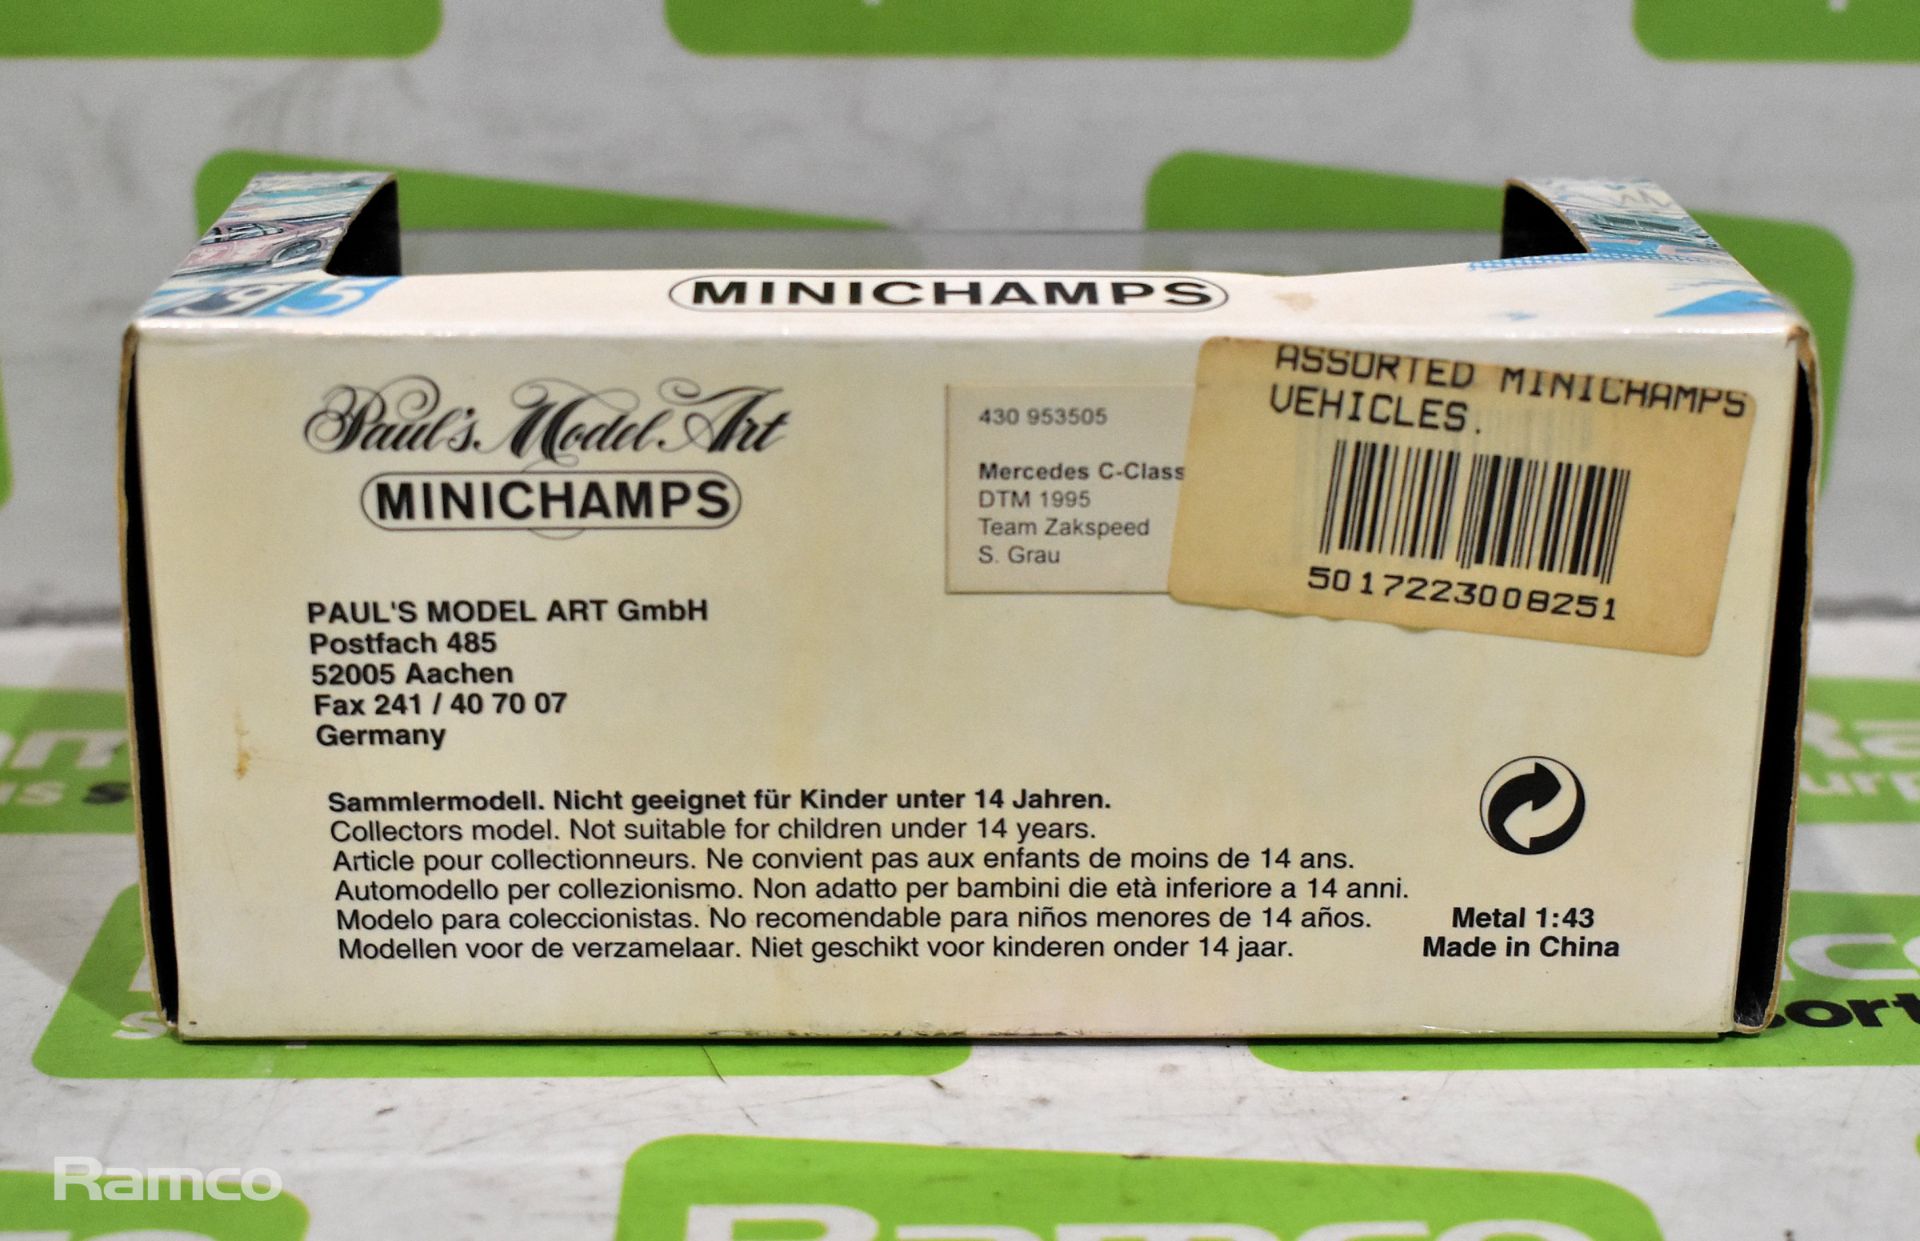 Minichamps Paul’s Model Art Mercedes C-Class – DTM 1995 – Team Zakspeed – S. Grau - 1:43 metal model - Image 2 of 2